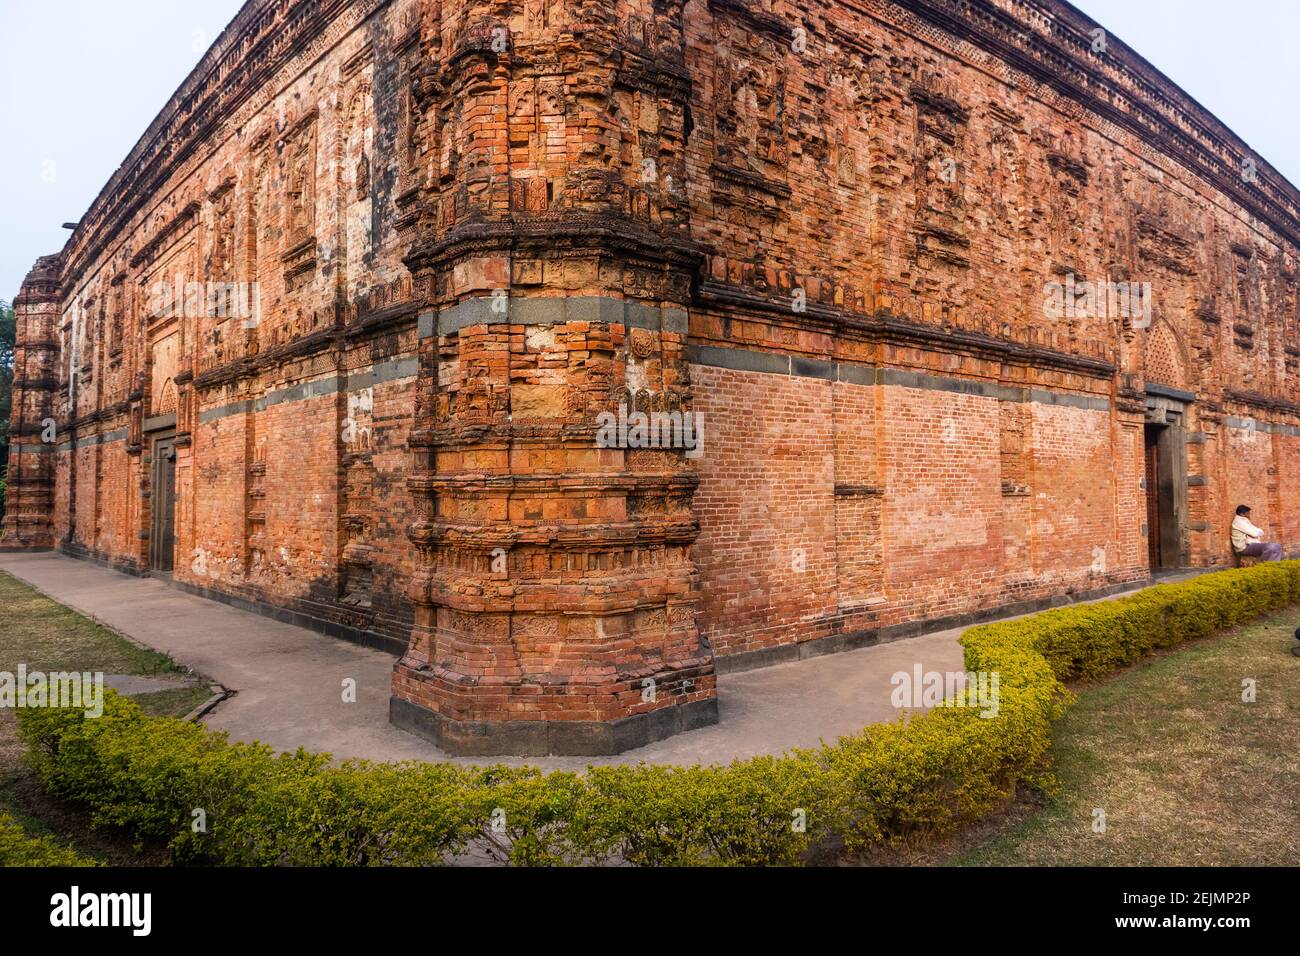 Malda, West Bengal, India - January 2018: The ancient brick walls of the Eklakhi mausoleum in the village of Pandua near the city of Malda. Stock Photo